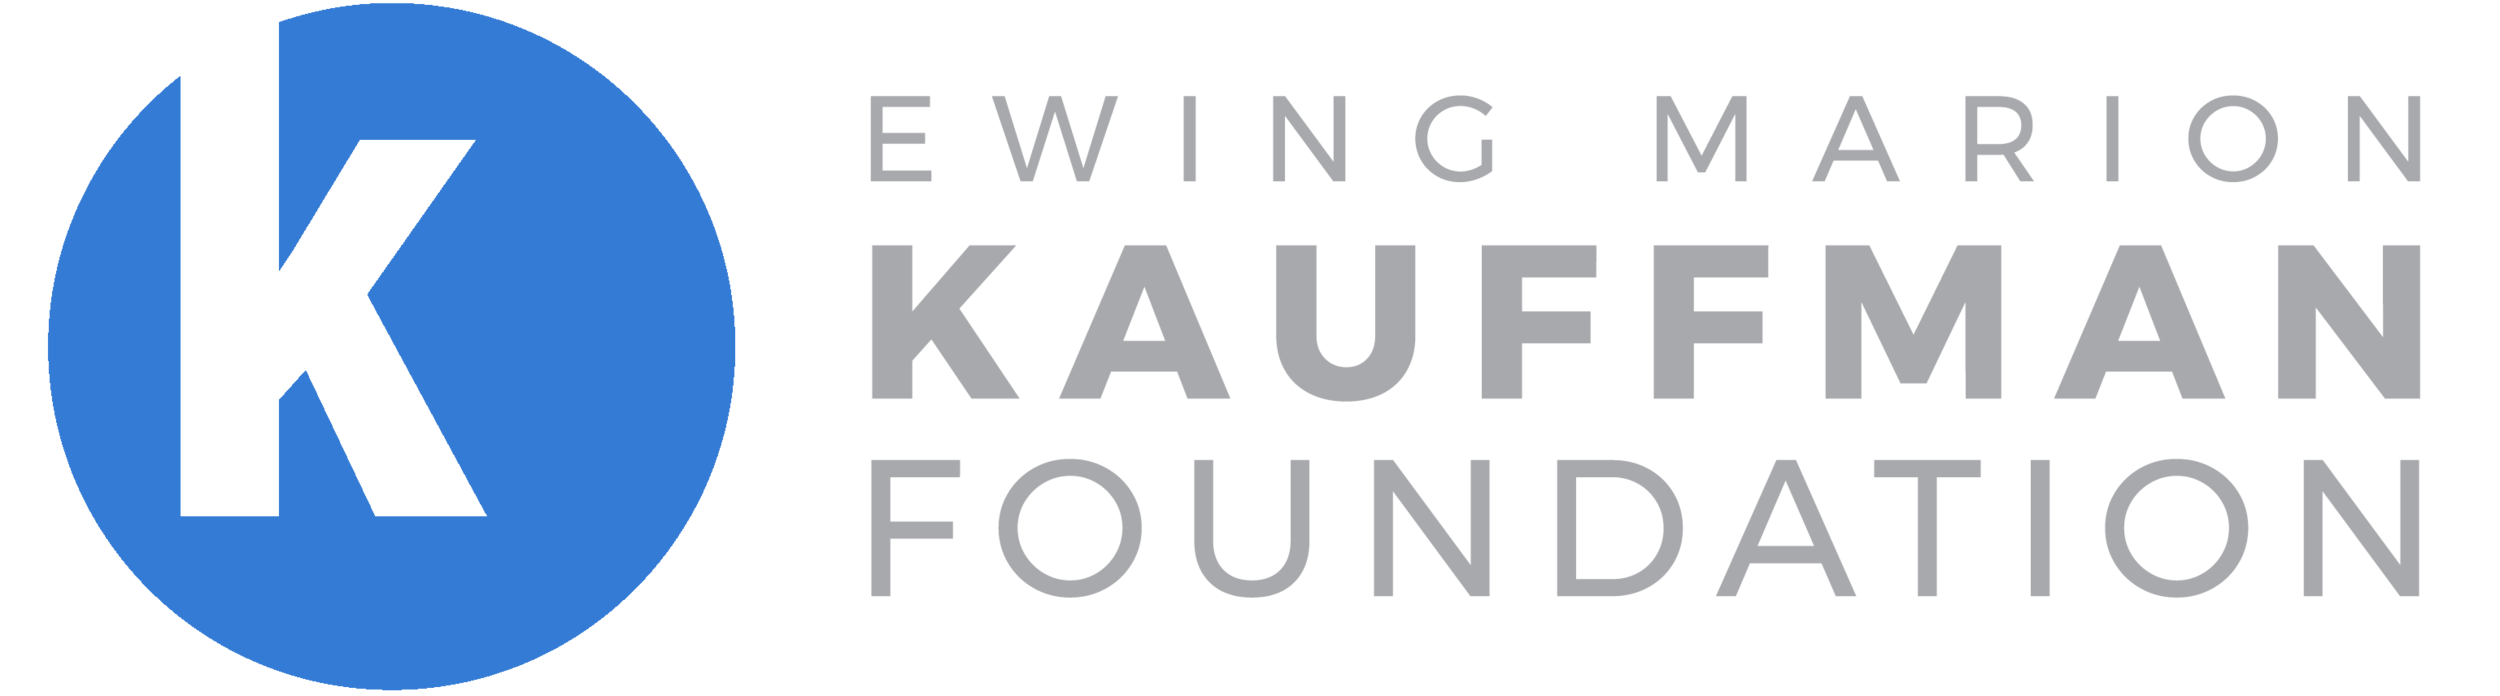 kauffman foundation logo.png